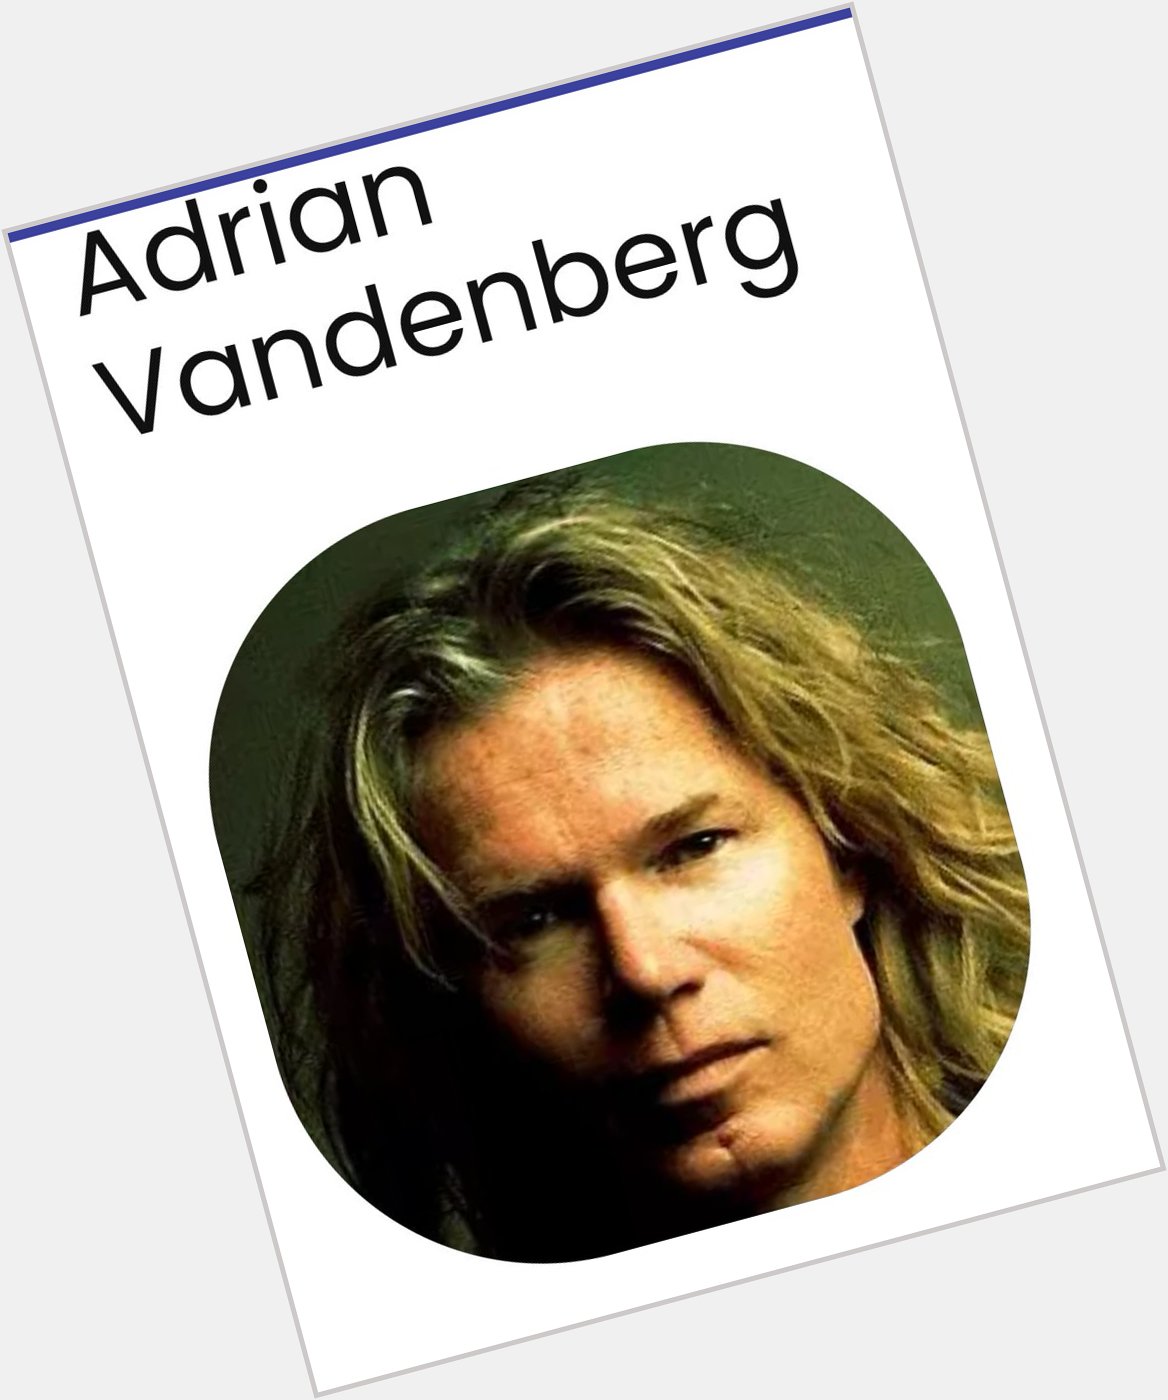 Wishing a belated Happy 68th Birthday to guitarist Adrian Vandenberg. Born January 31, 1954. Adrian Vandenberg 